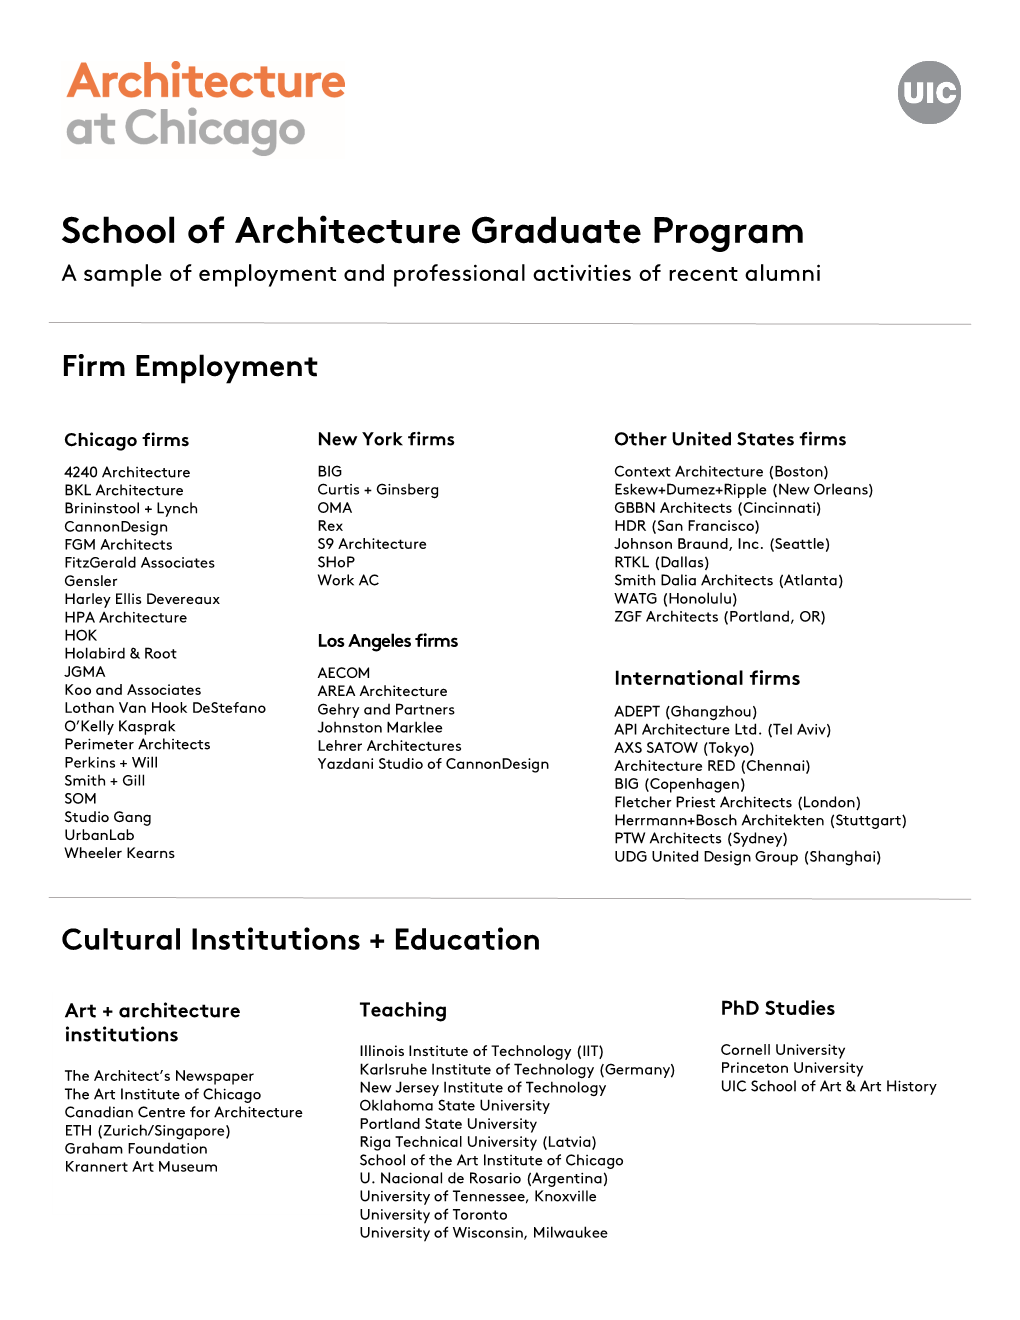 Recent Alumni Employment and Professional